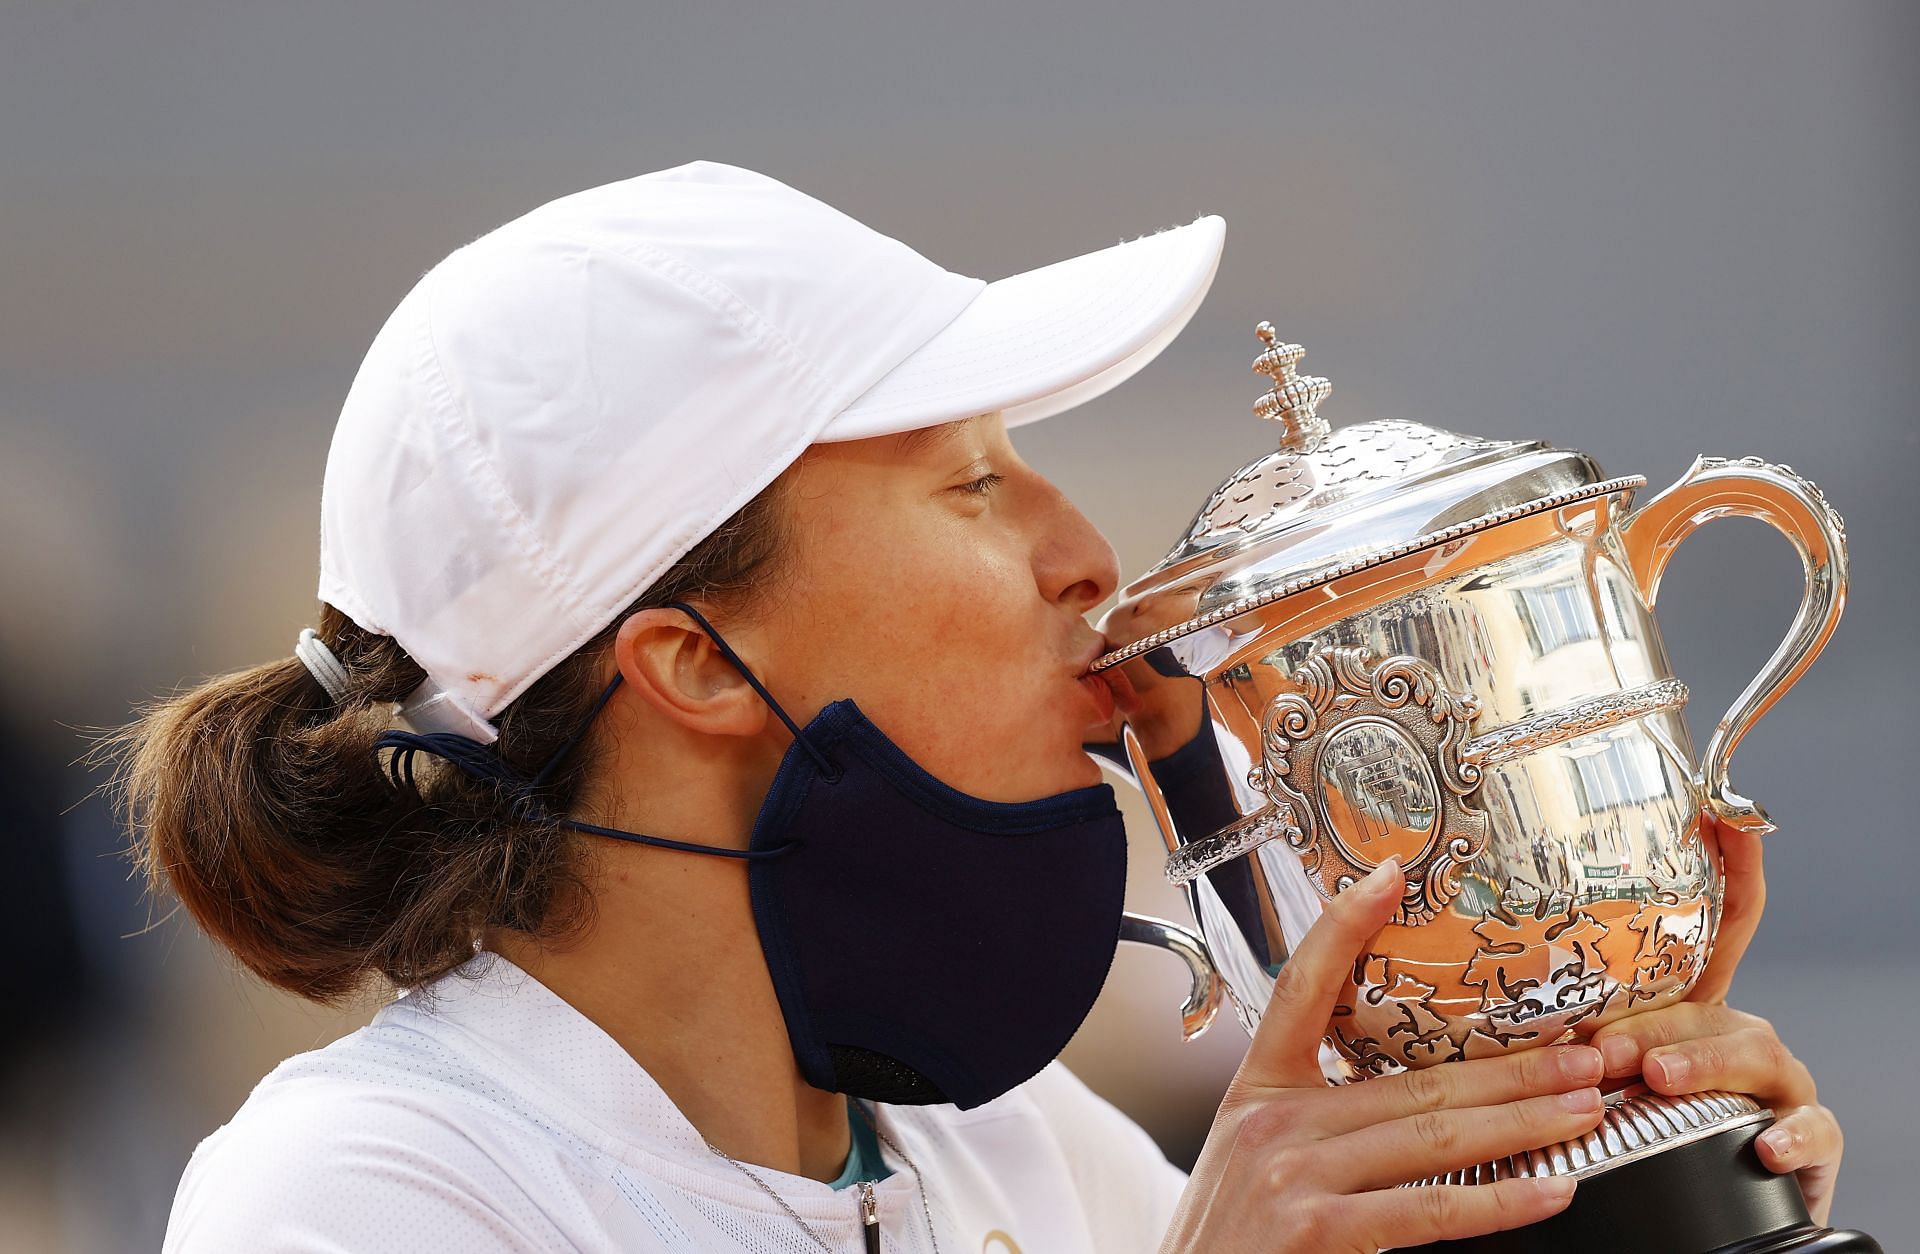  Swiatek won the 2020 Roland Garros